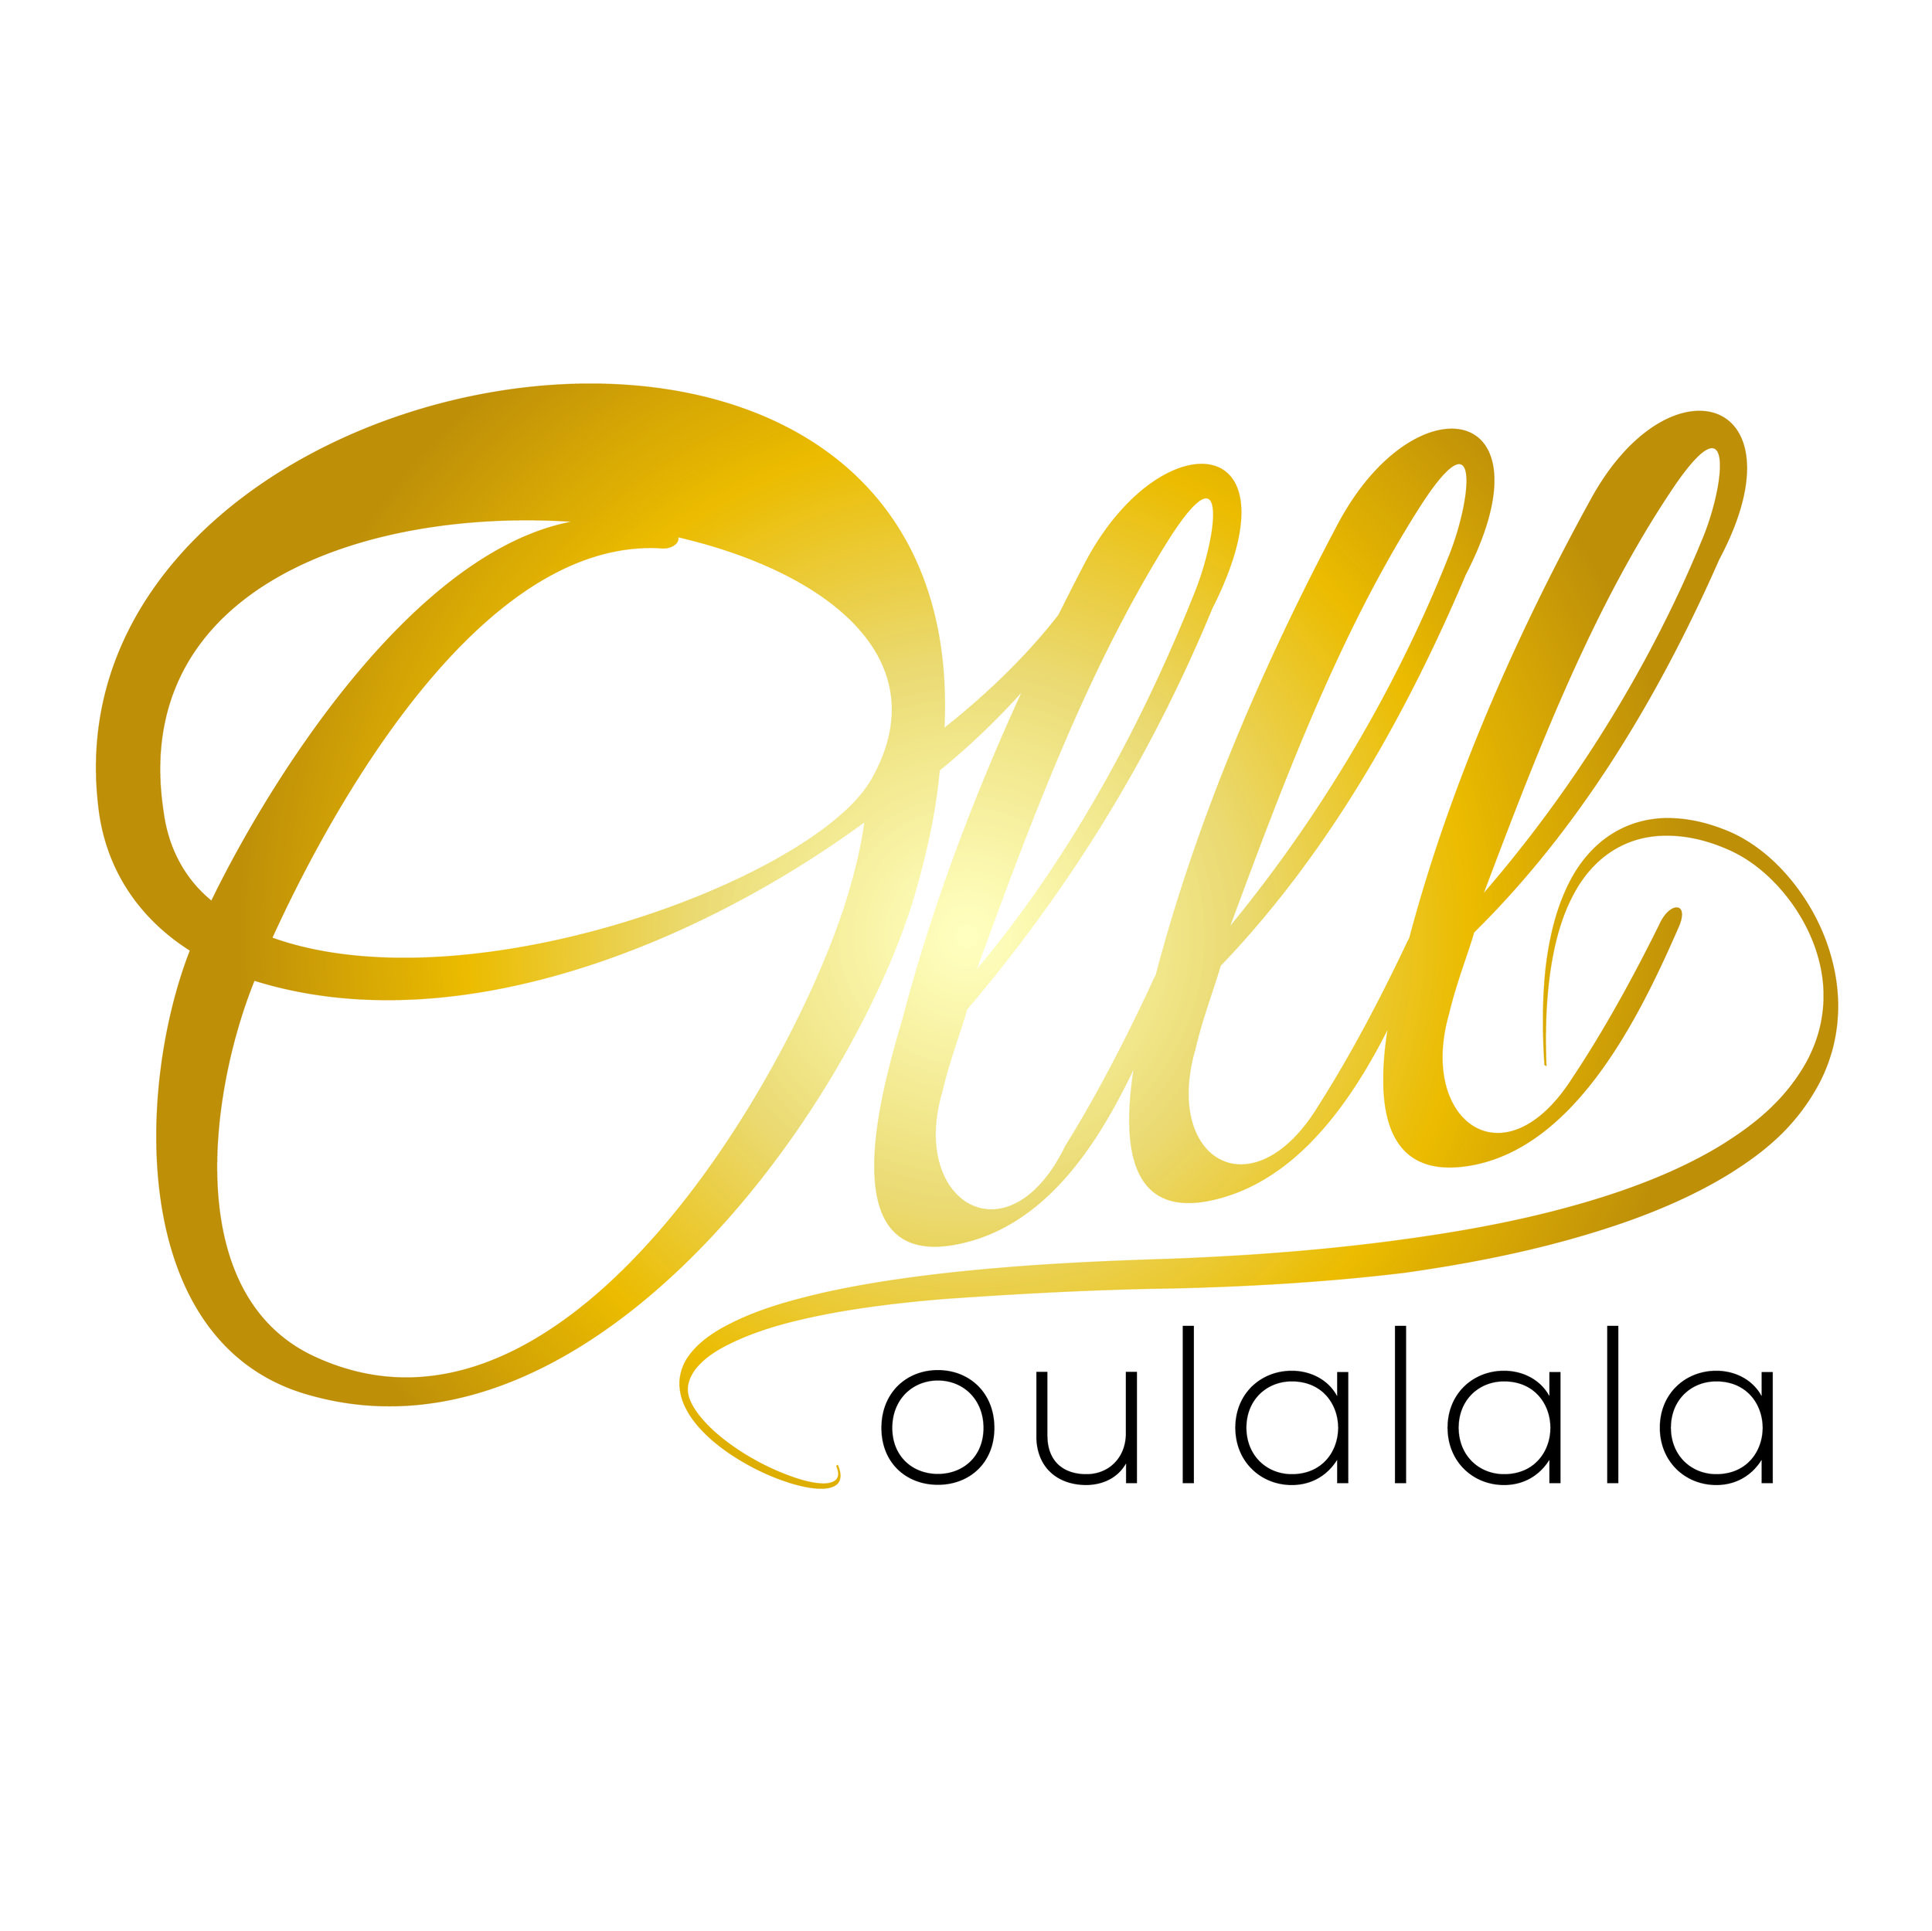 Oulalala